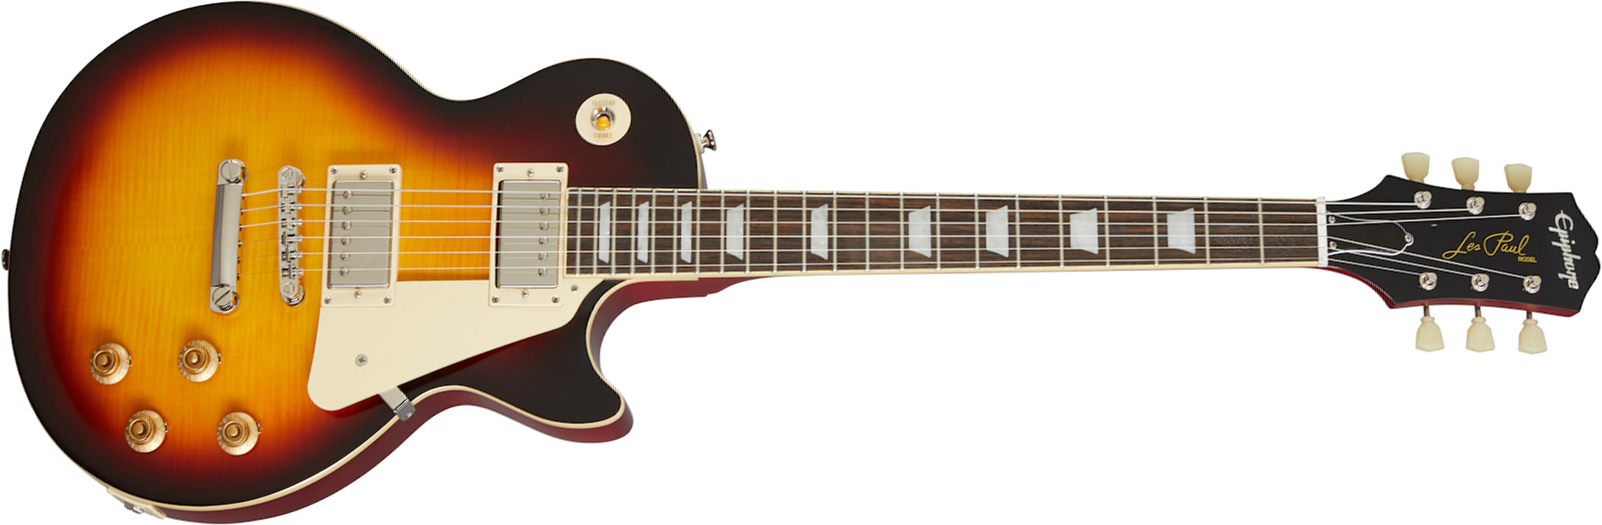 Epiphone Les Paul Standard 1959 Outfit 2h Ht Rw - Aged Dark Burst - Single cut electric guitar - Main picture